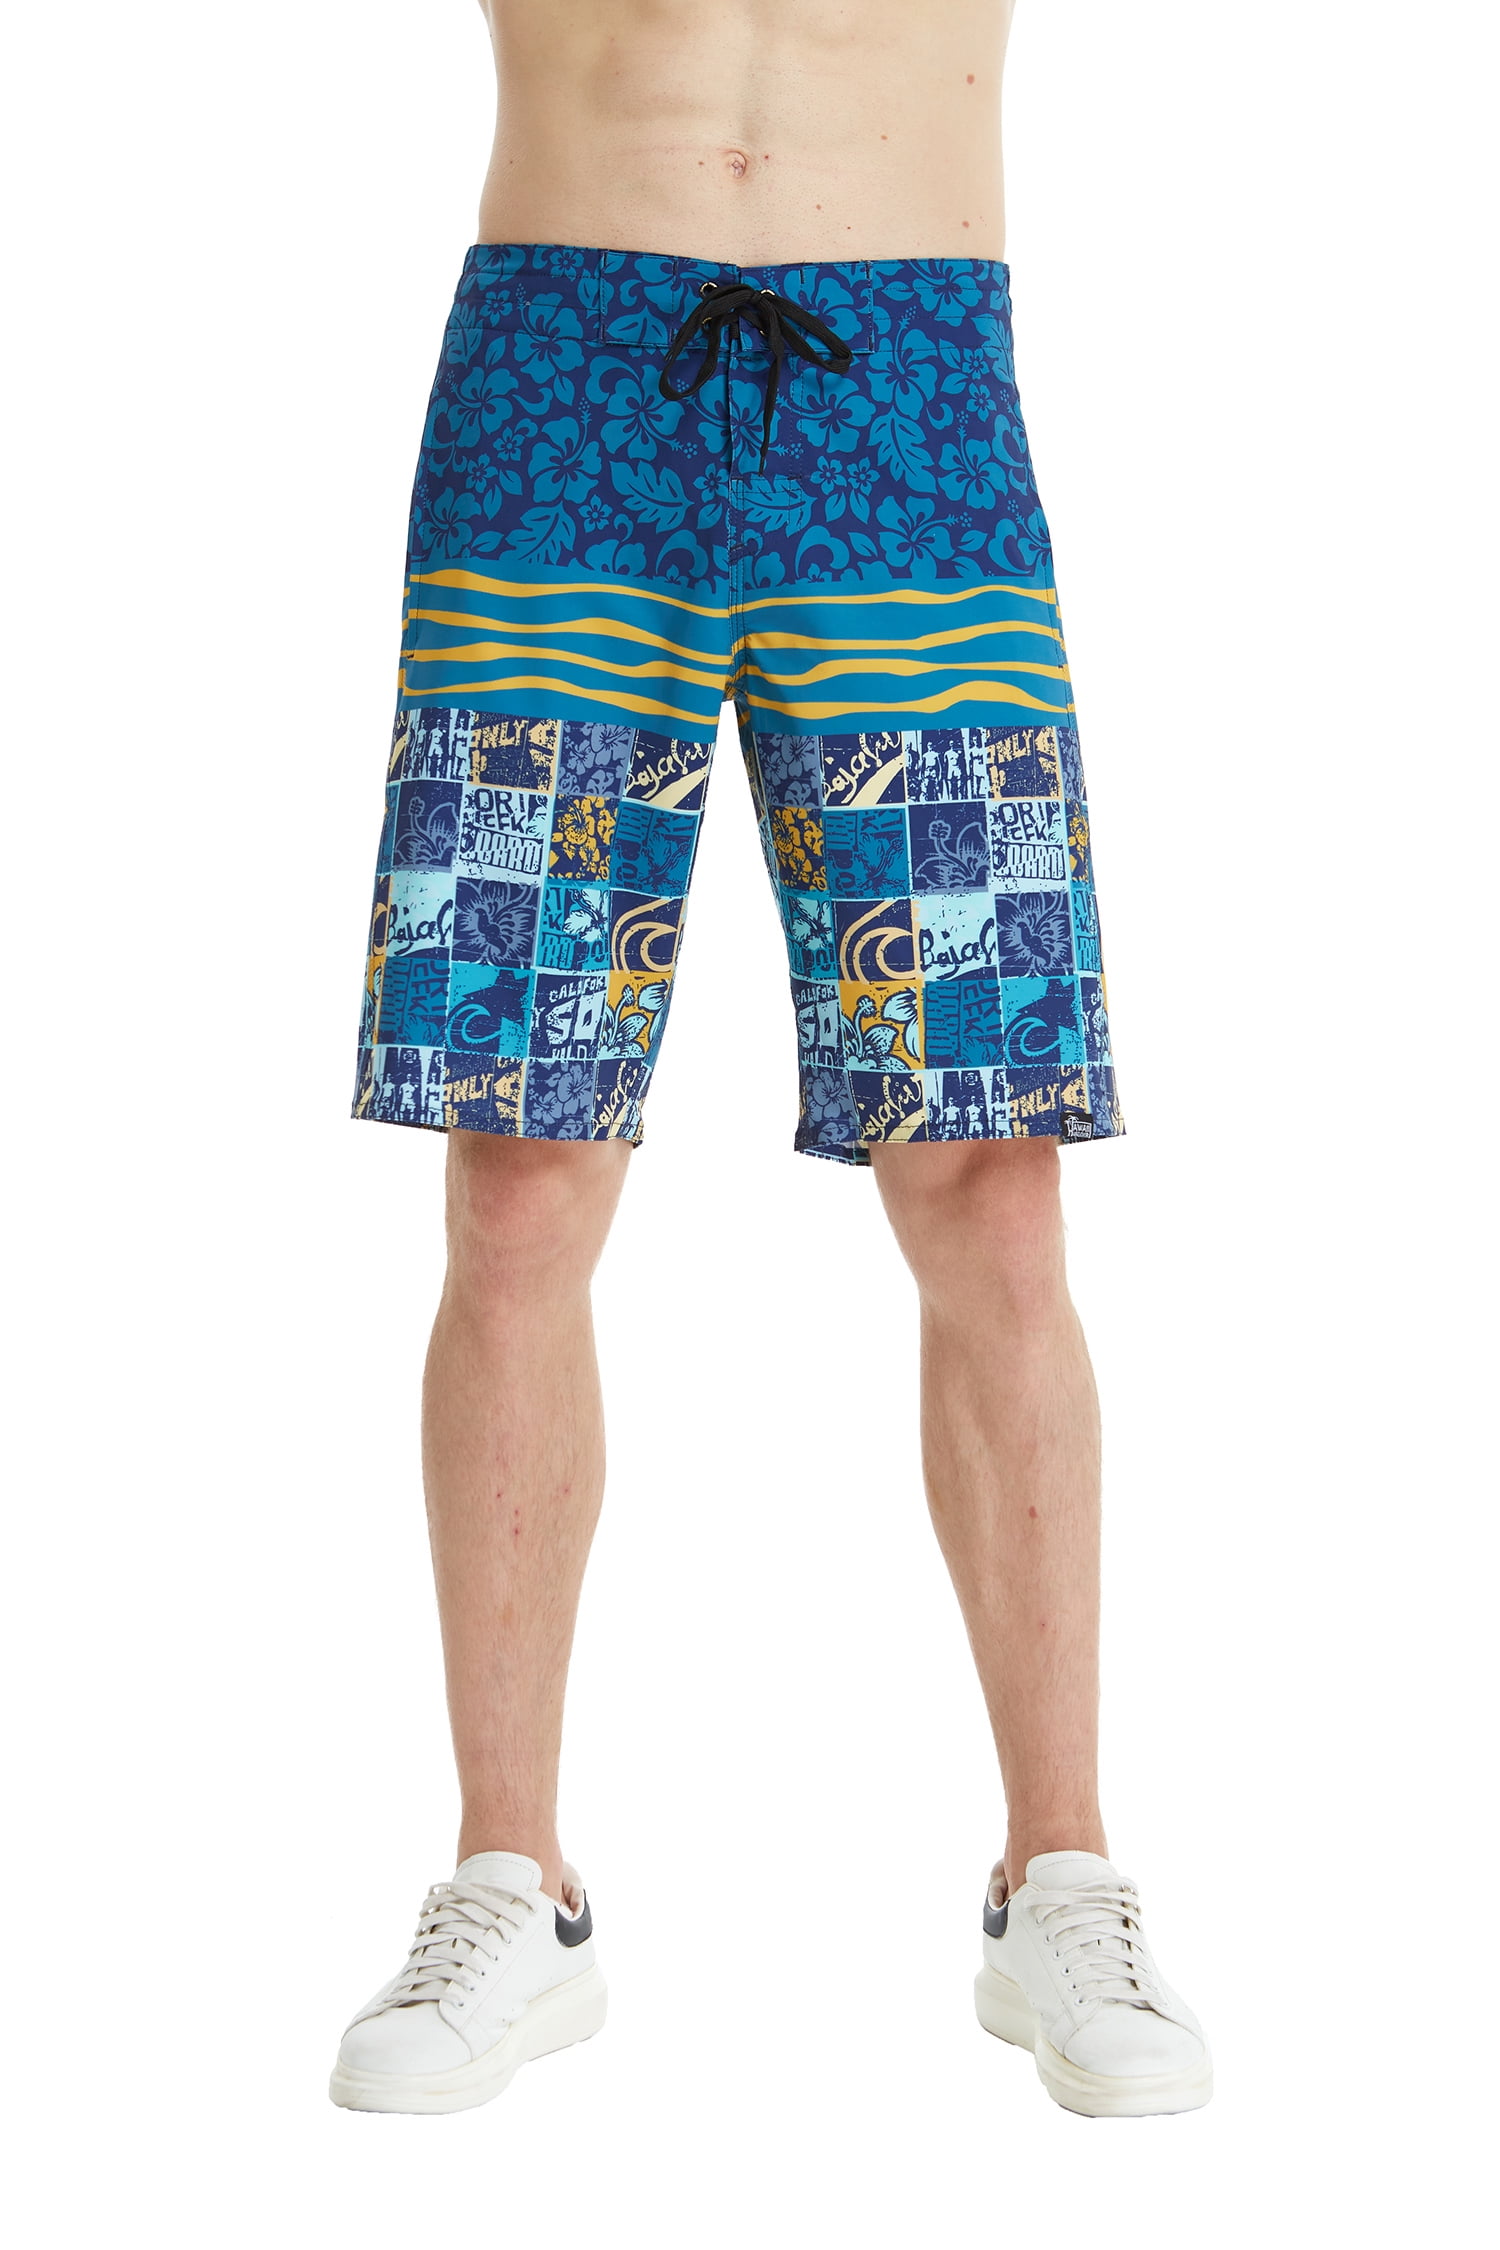 Teen Soft Hawaii Beach Tour Vintage Beach Shorts Swim Trunks Board Shorts